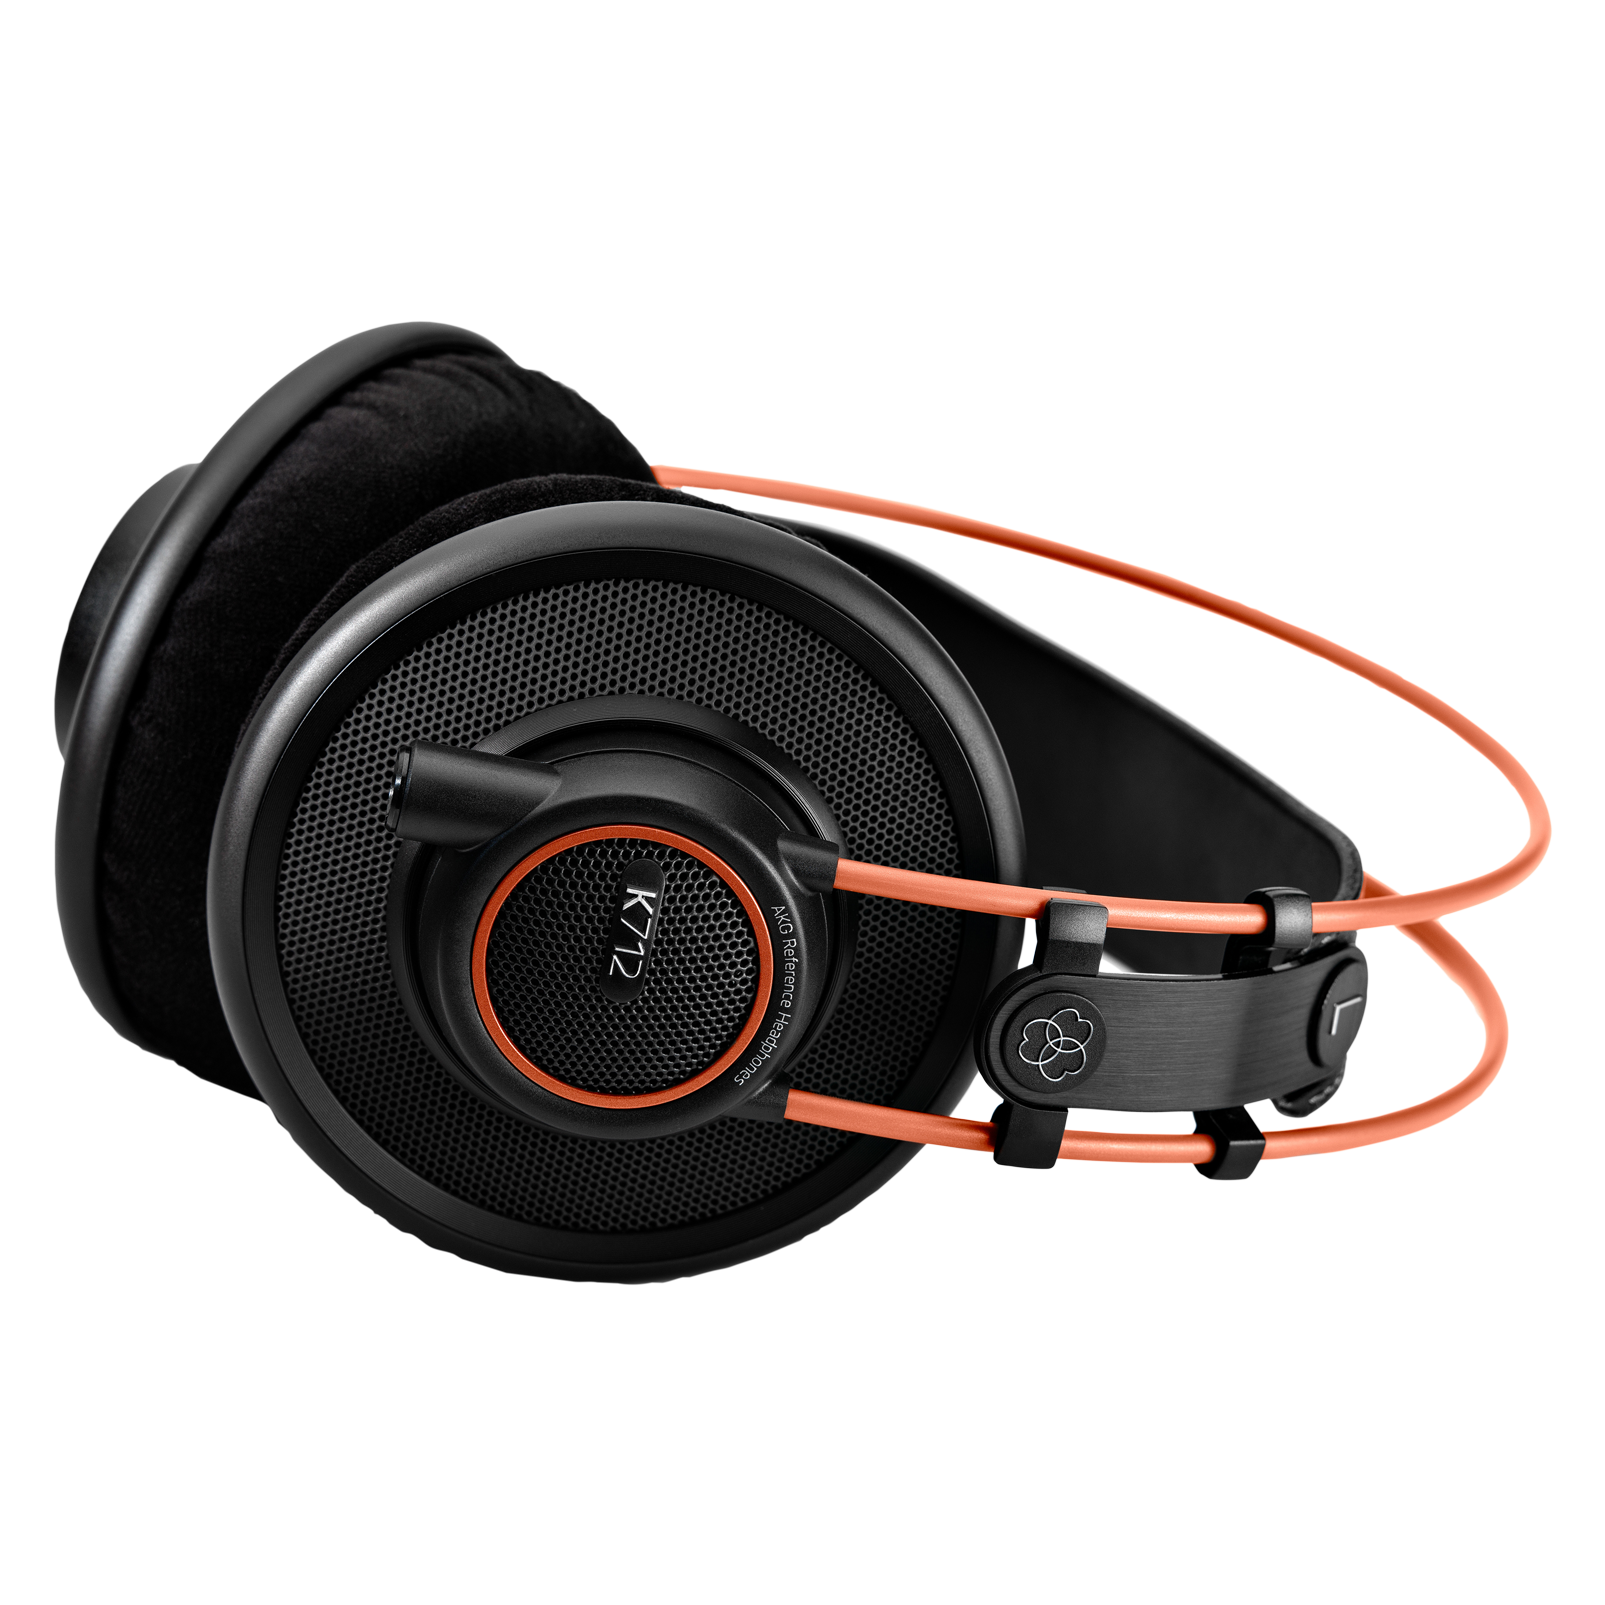 K712 PRO - Black - Reference studio headphones  - Detailshot 3